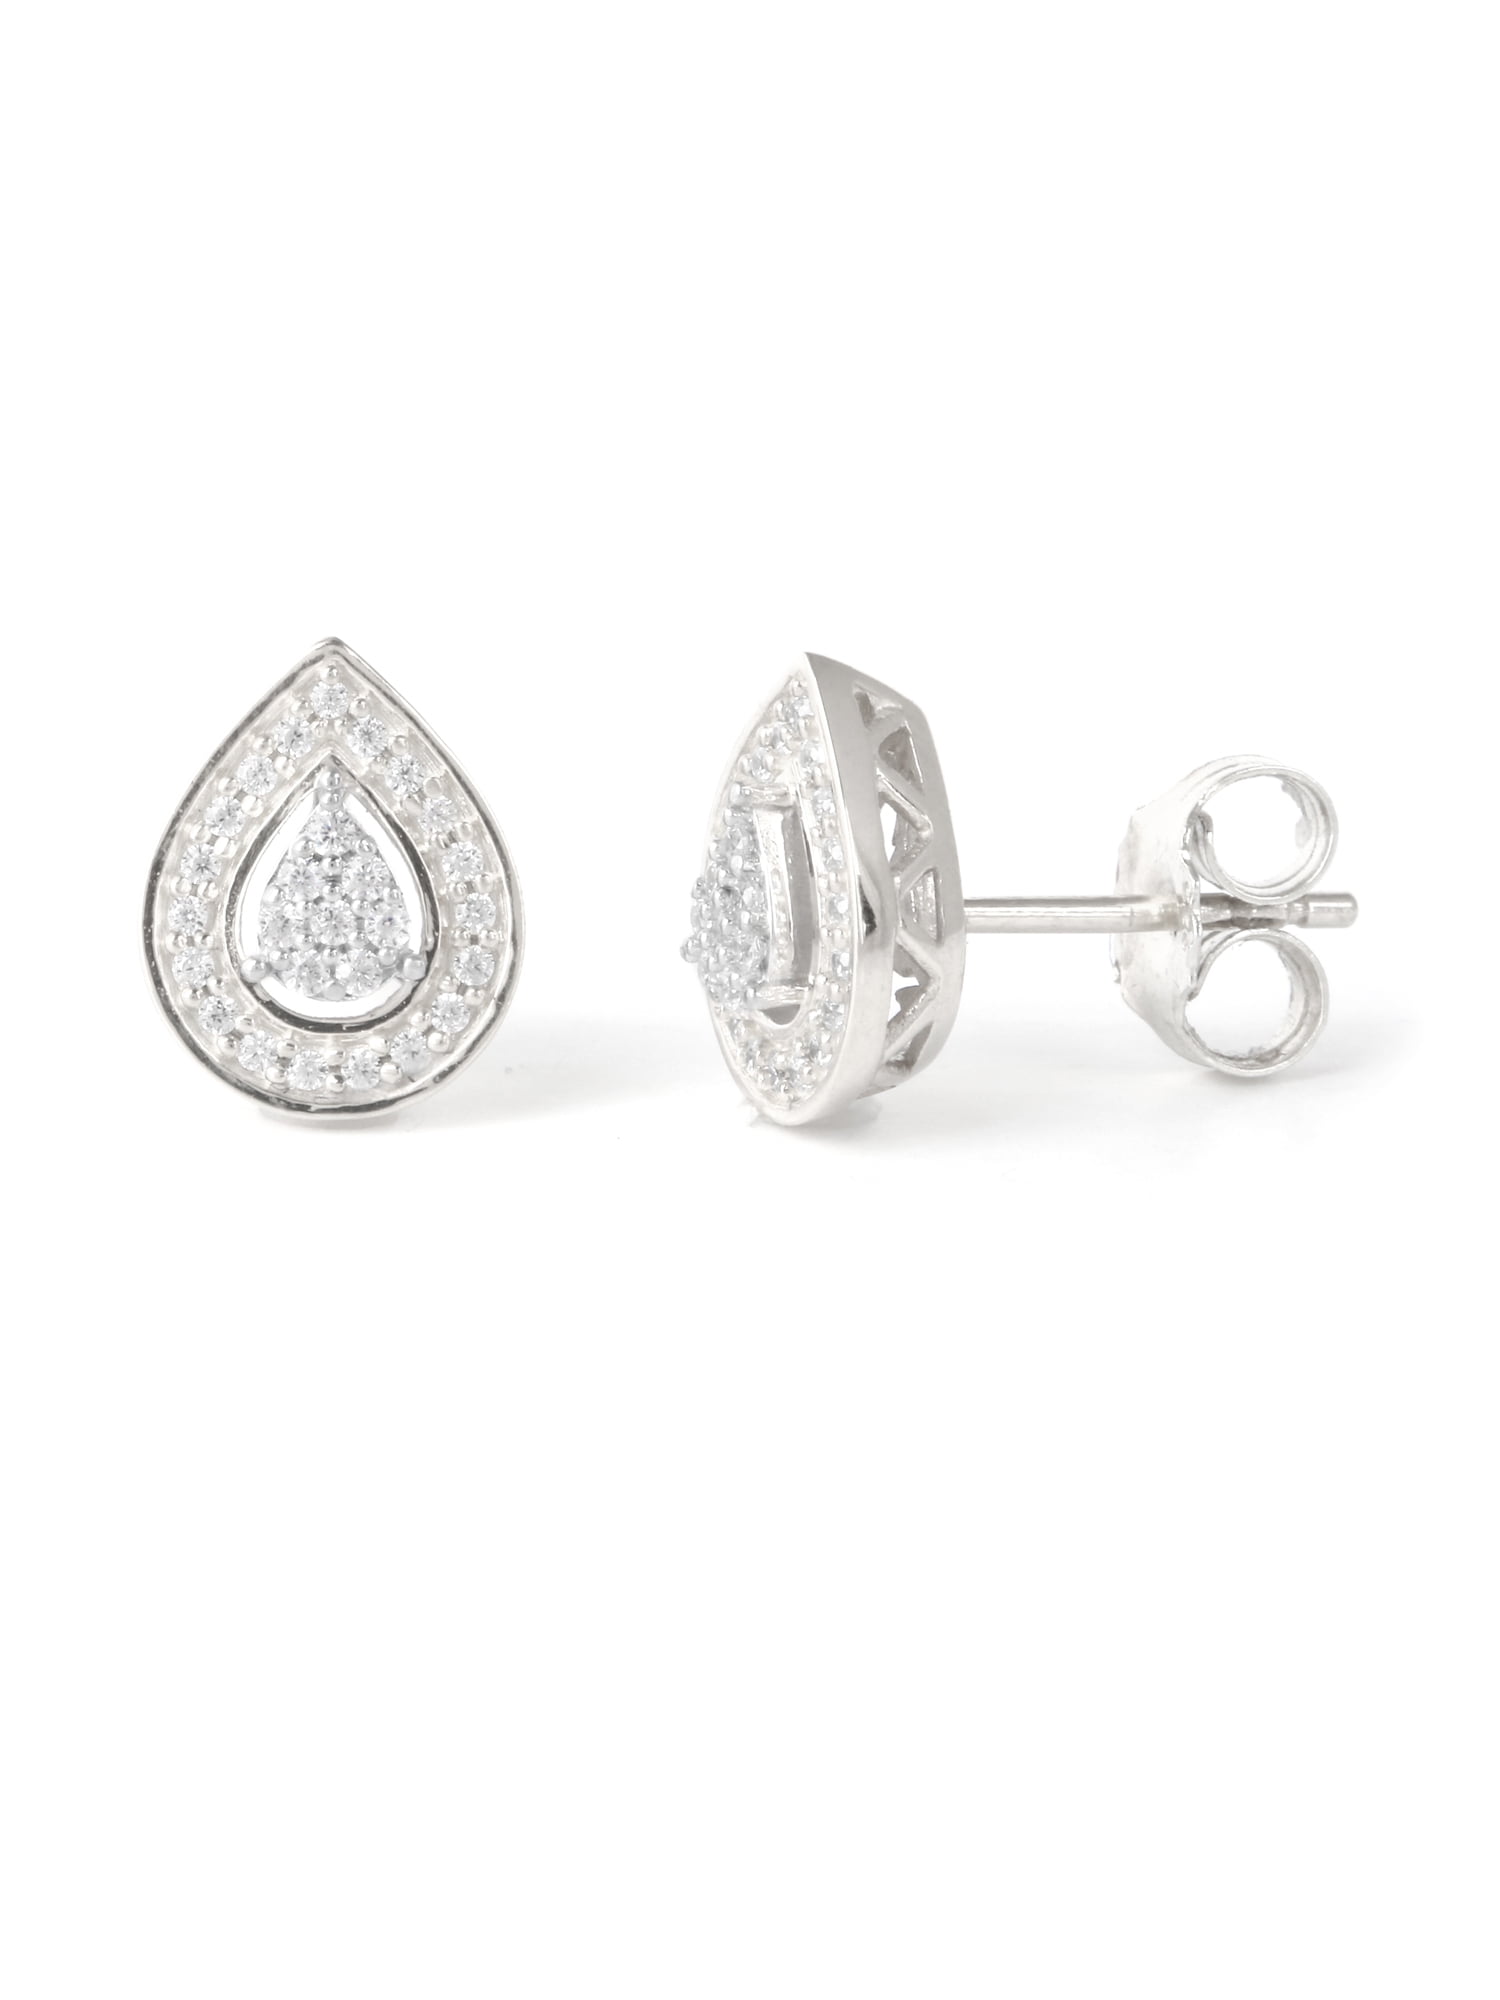 Wedding Gift Imperil Handmade DropDangle Pearl & Diamond Stone Earring 925 Sterling Sliver Jewelry Anniversary Gift